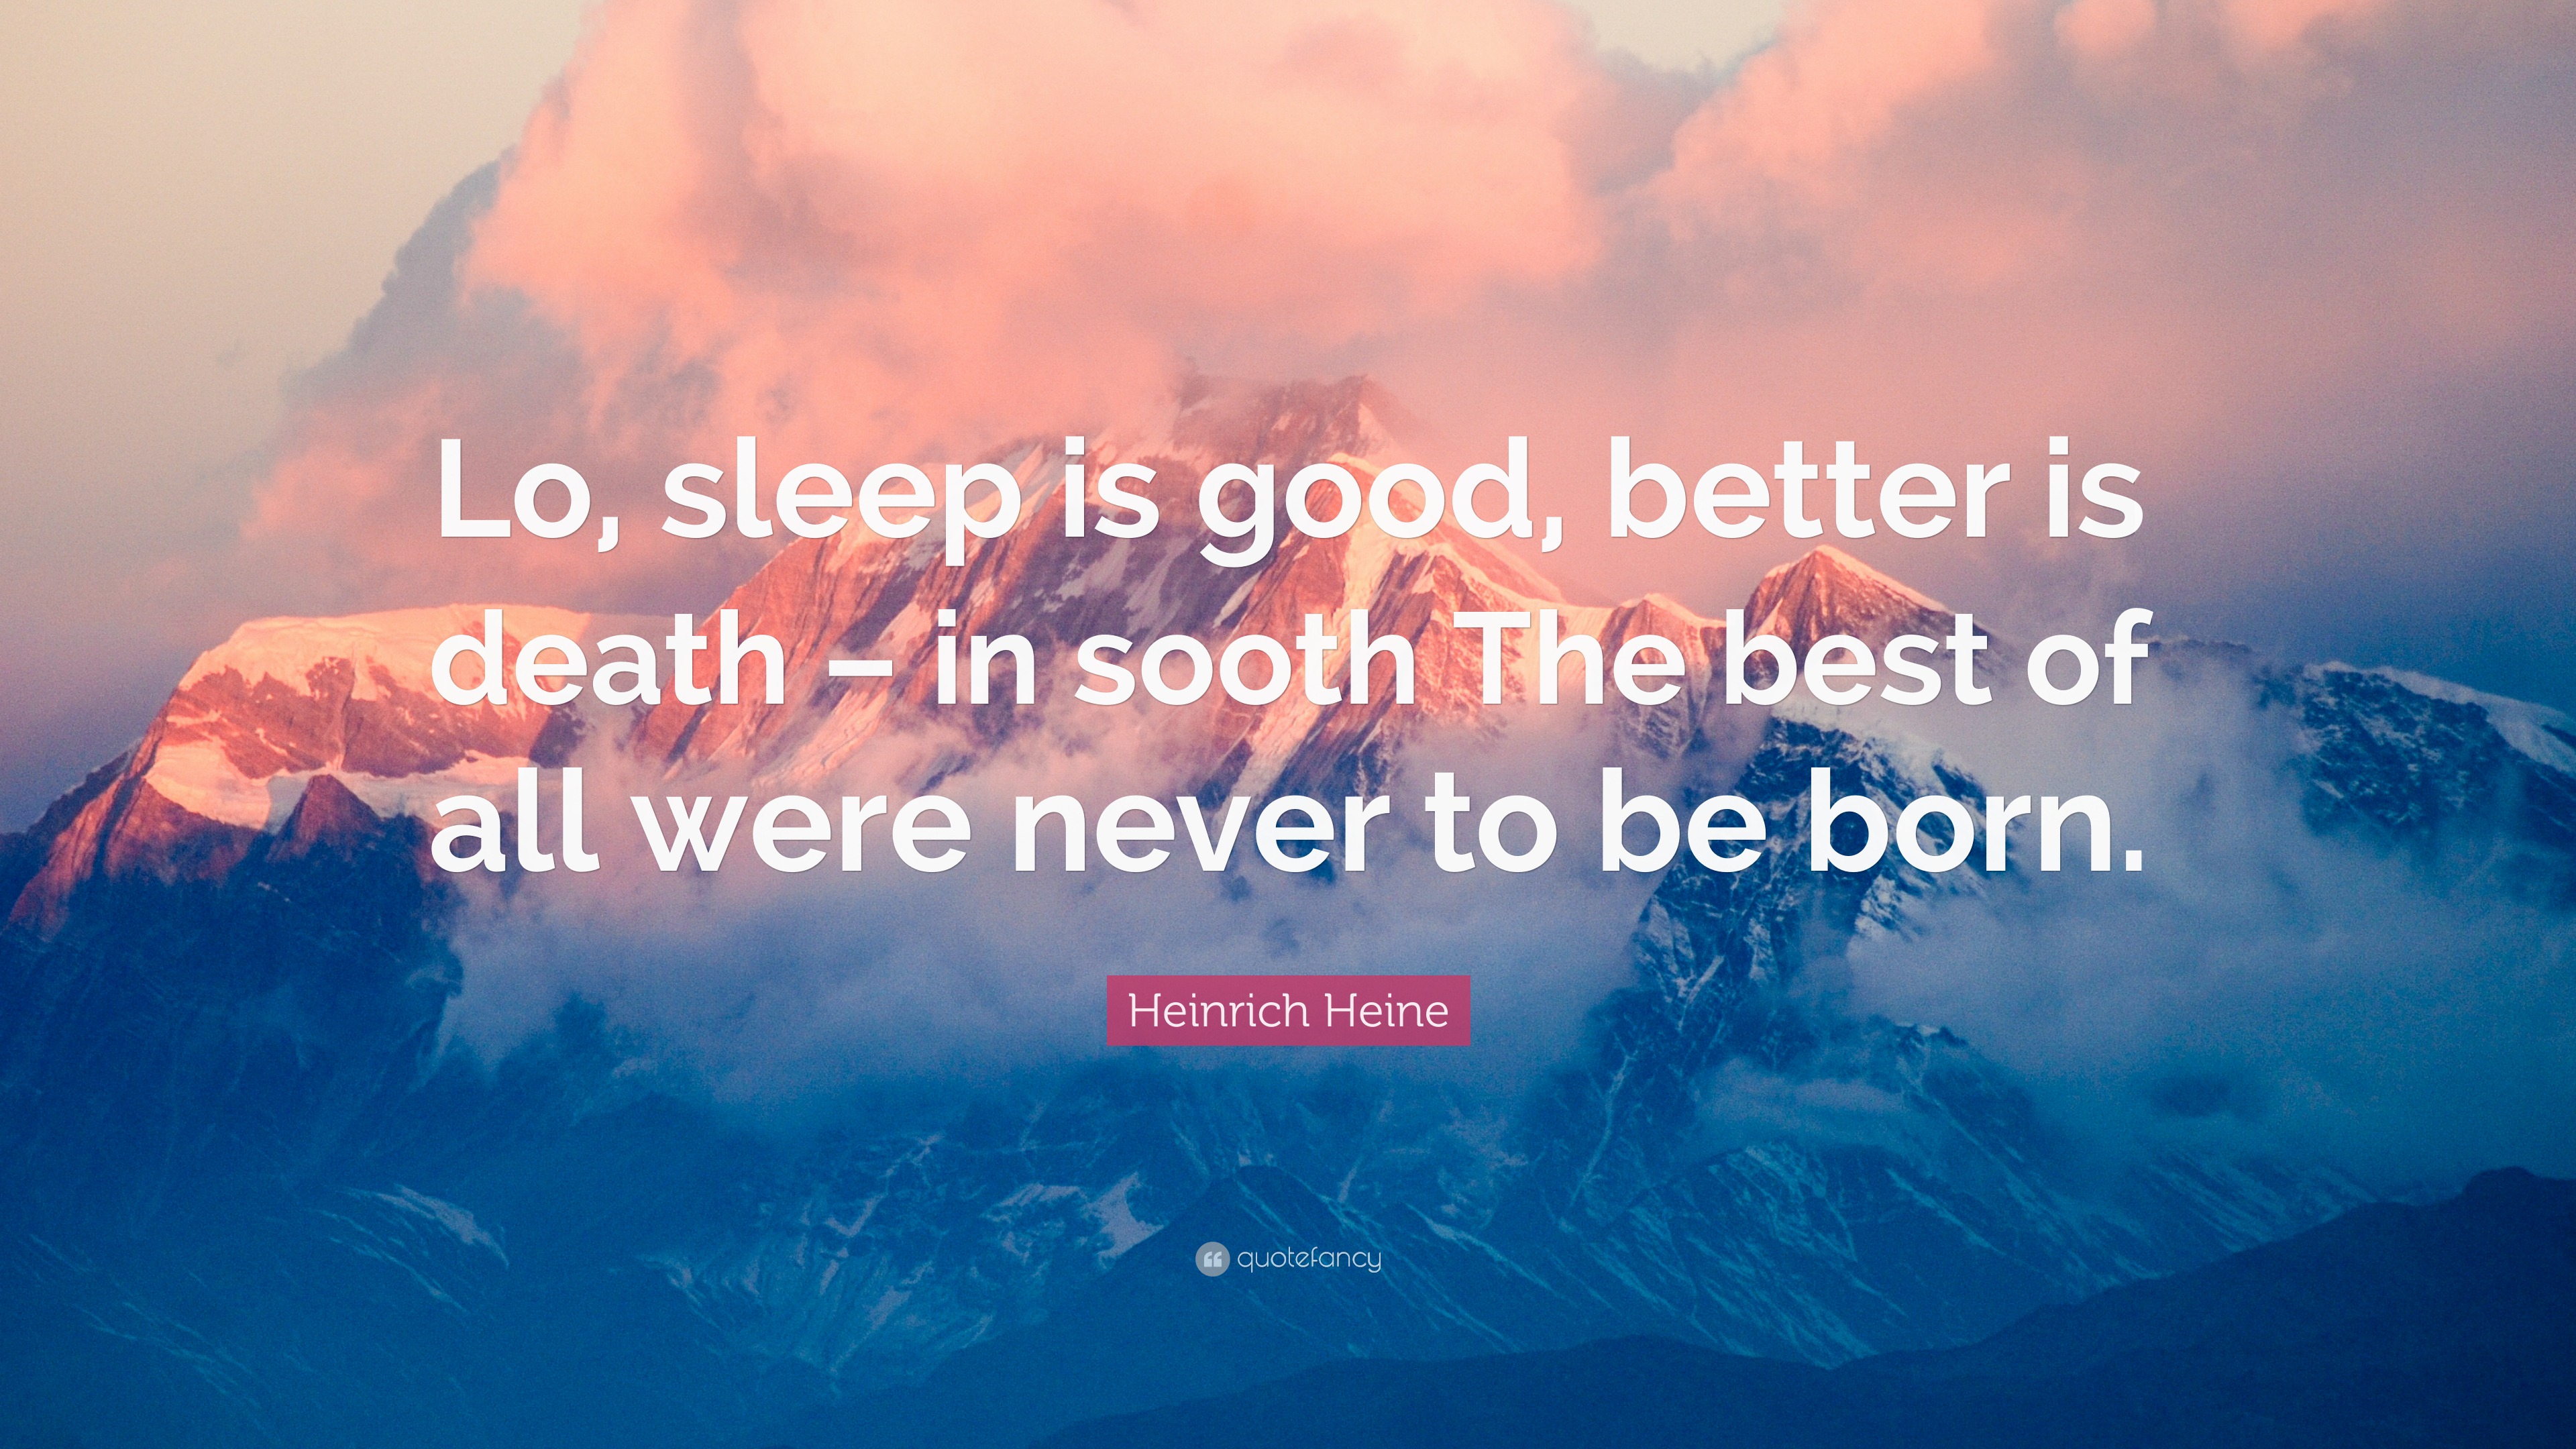 Heinrich Heine Quote: “Lo, sleep is good, better is death – in sooth ...